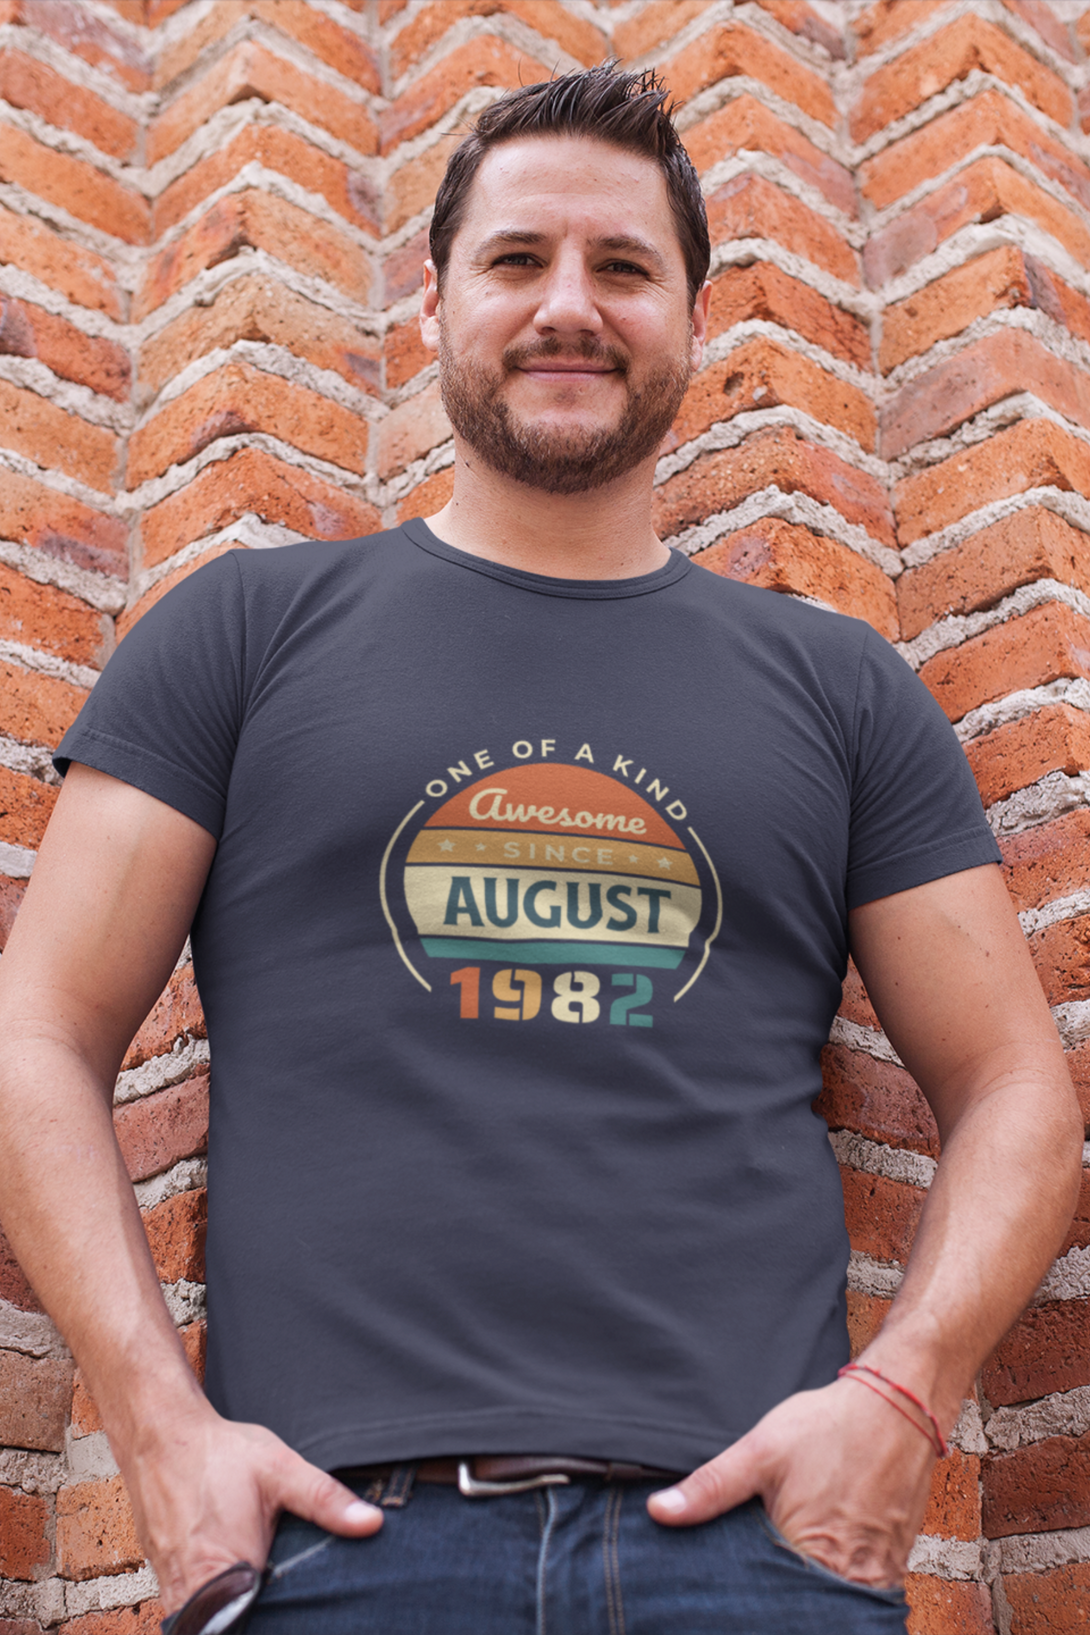 Vintage August 1982 Badge Printed T-Shirt For Men - WowWaves - 2